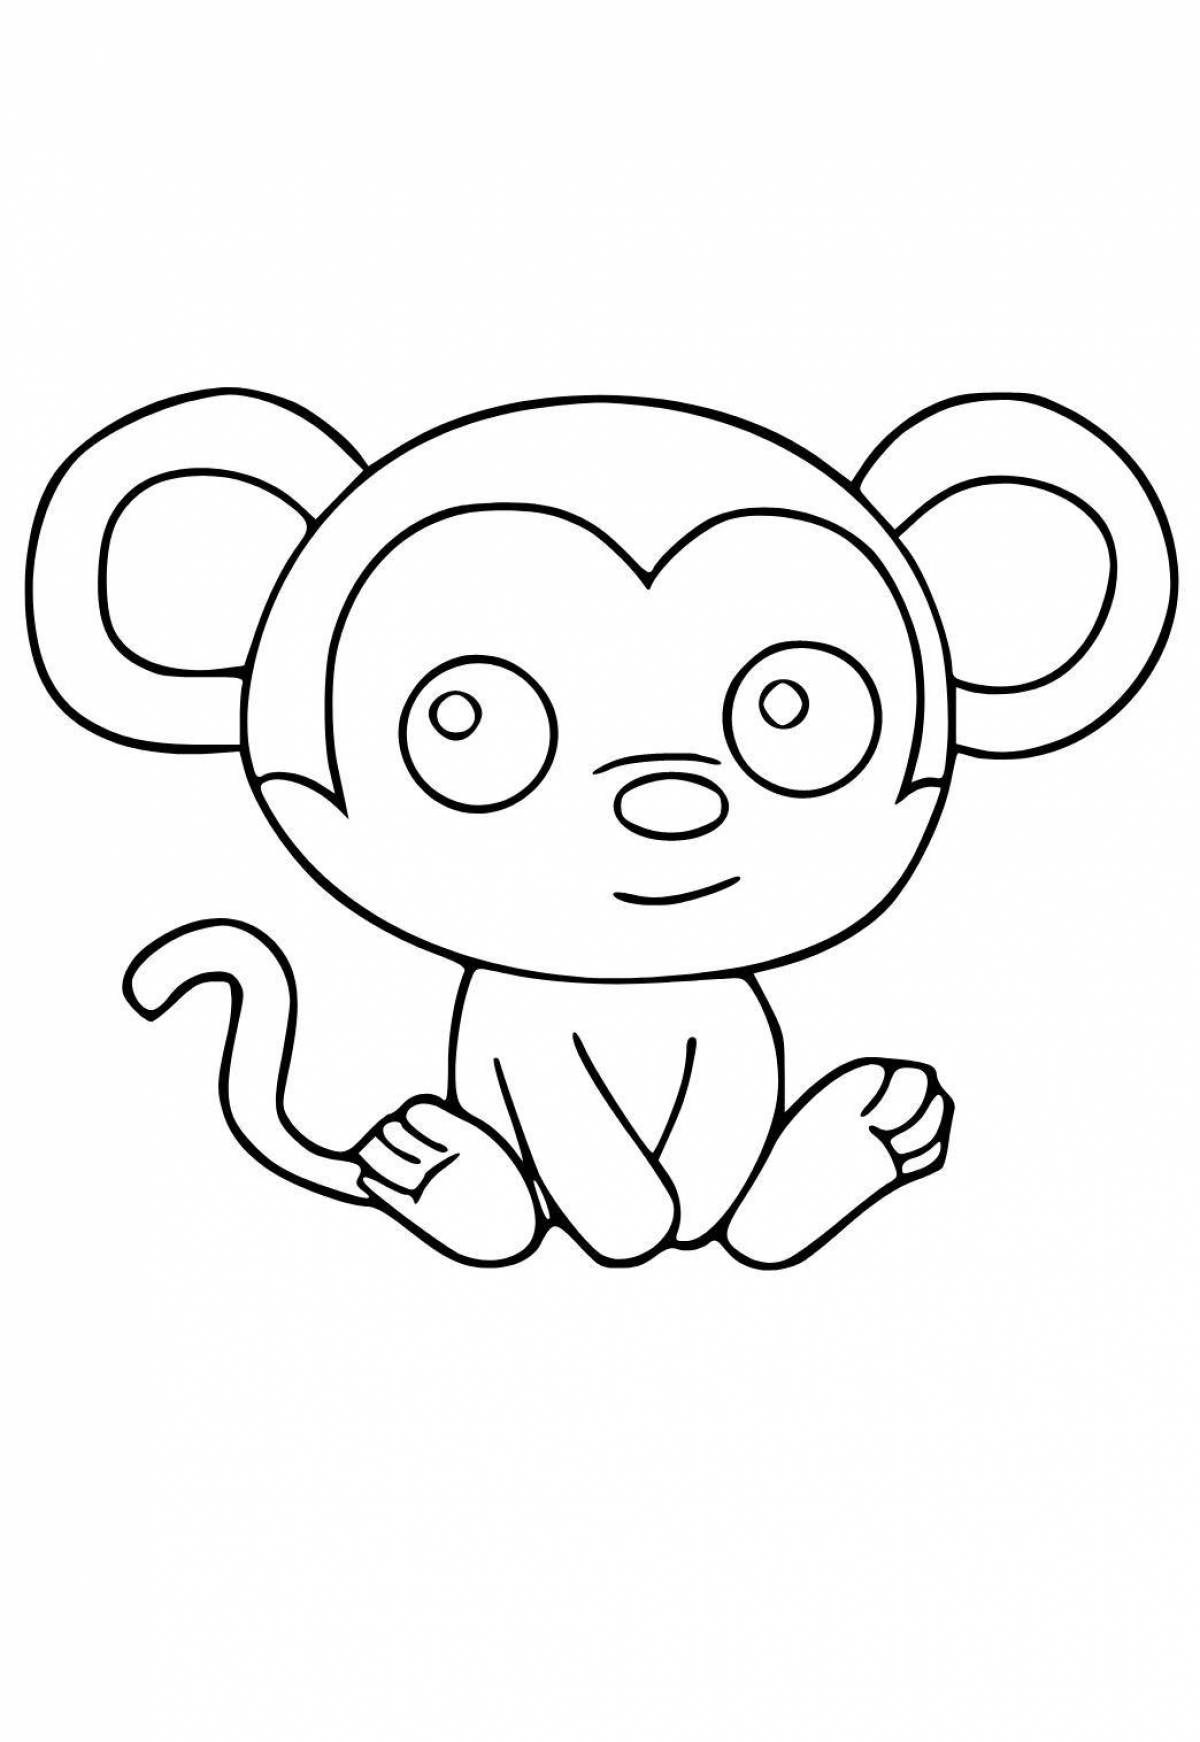 Shiny monkey coloring book